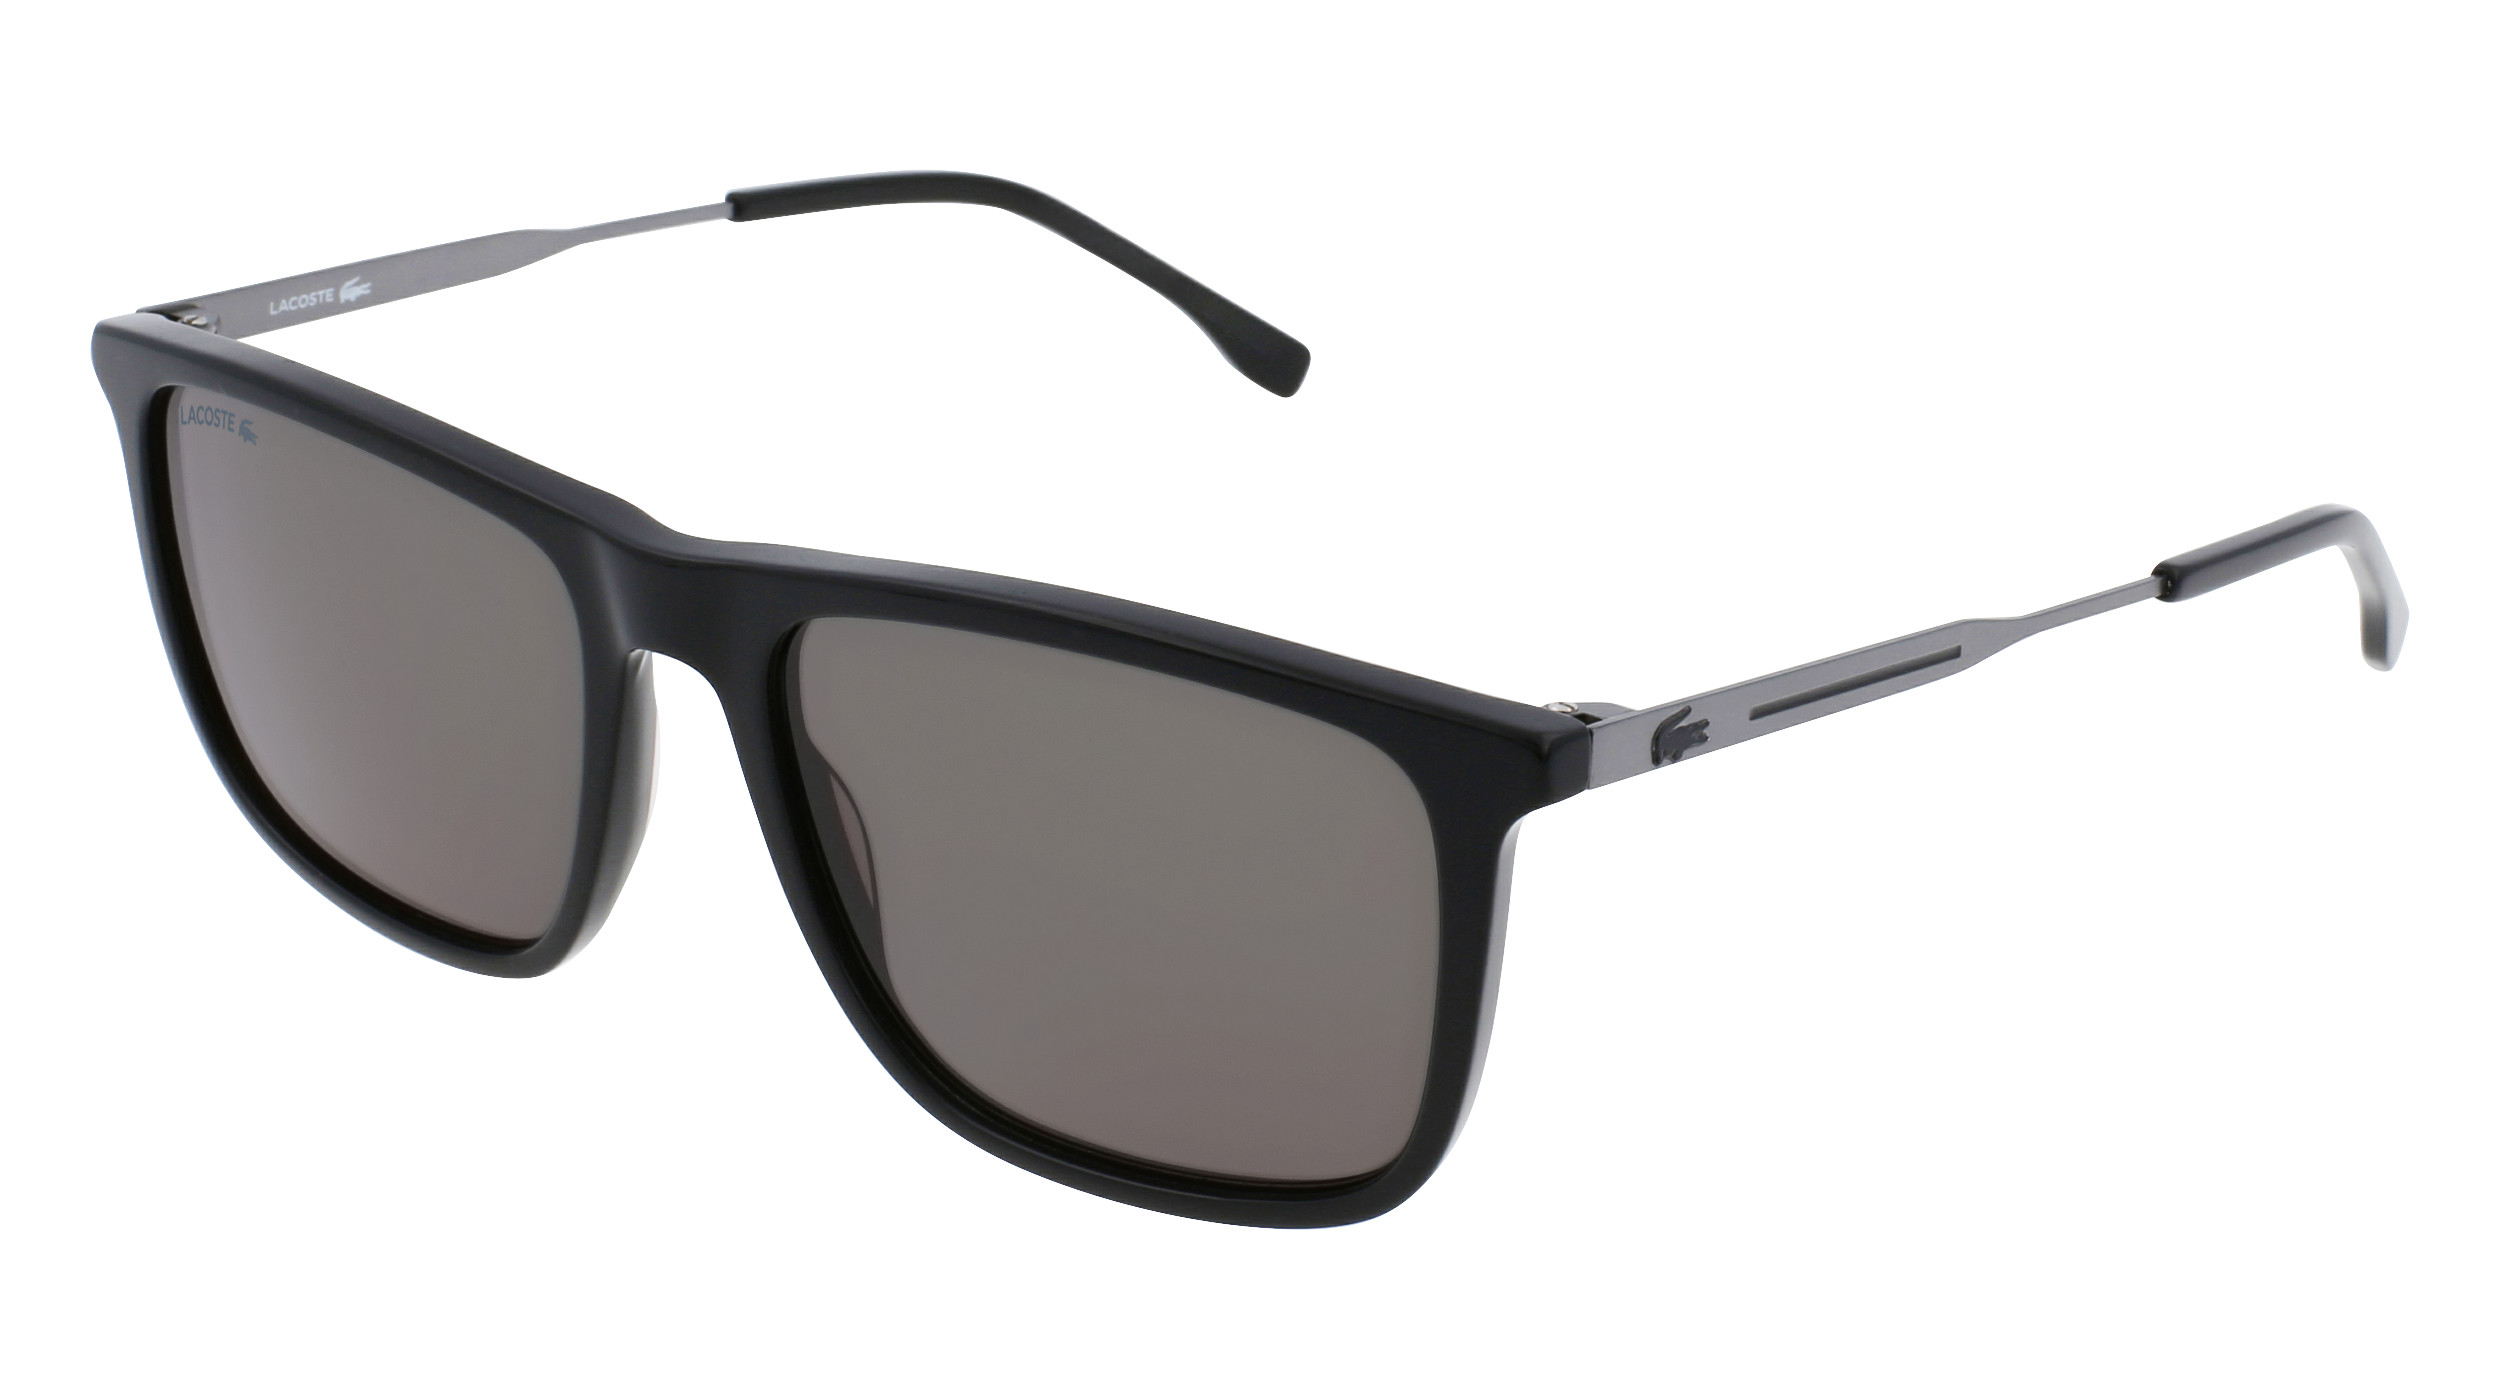 L945S 001 55 lacoste sunglasses - George & Matilda Eyecare and Optometrist